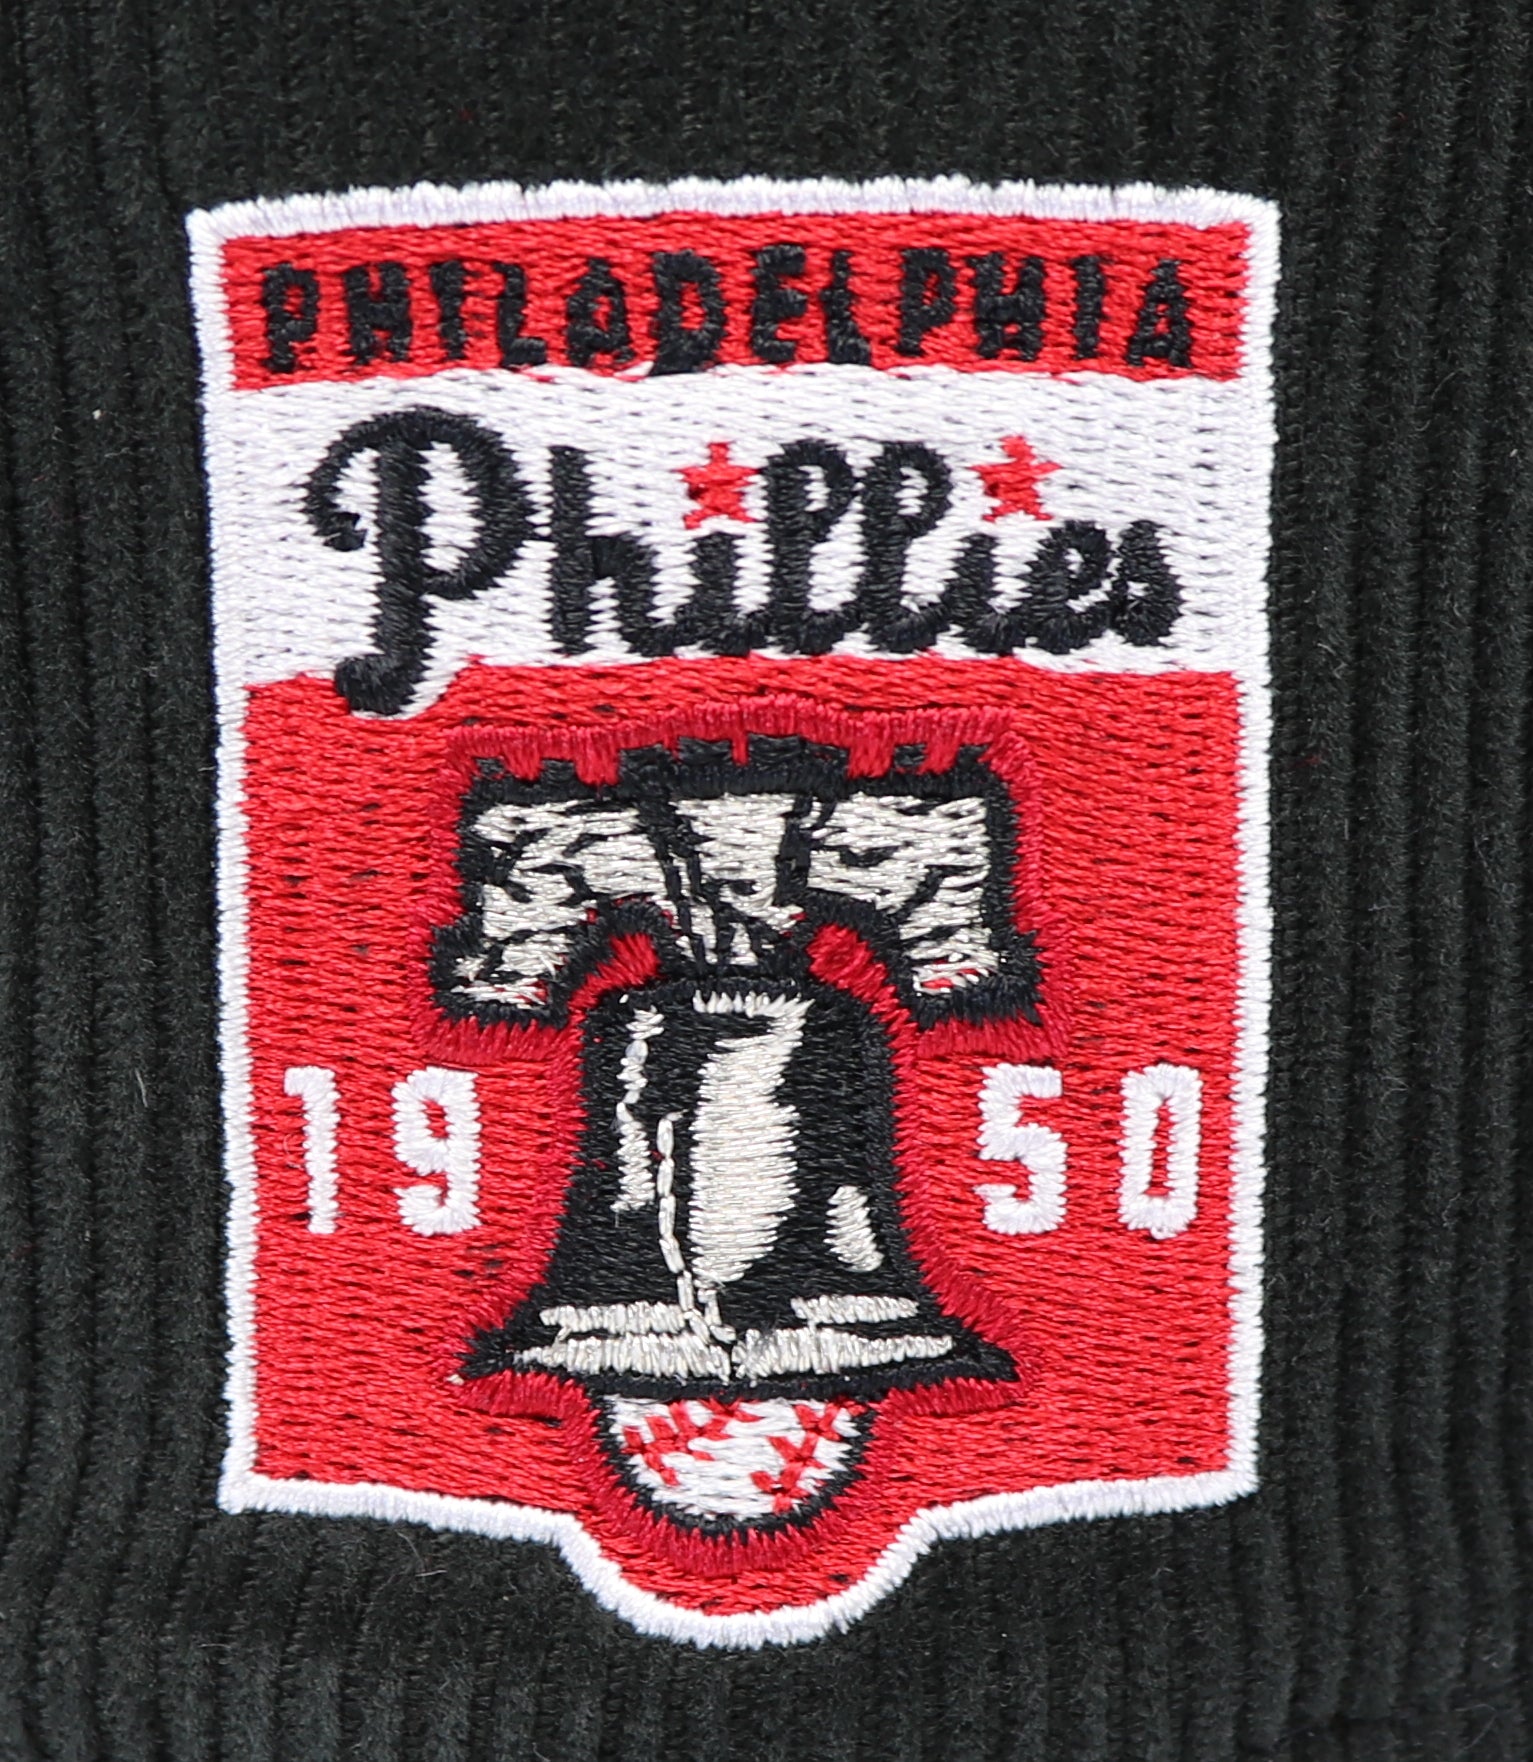 PHILADELPHIA FIGHTIN PHILLIES (CORDUROY) (1950 PHILLIES) NEW ERA 59FIFTY FITTED (RED UNDER VISOR)